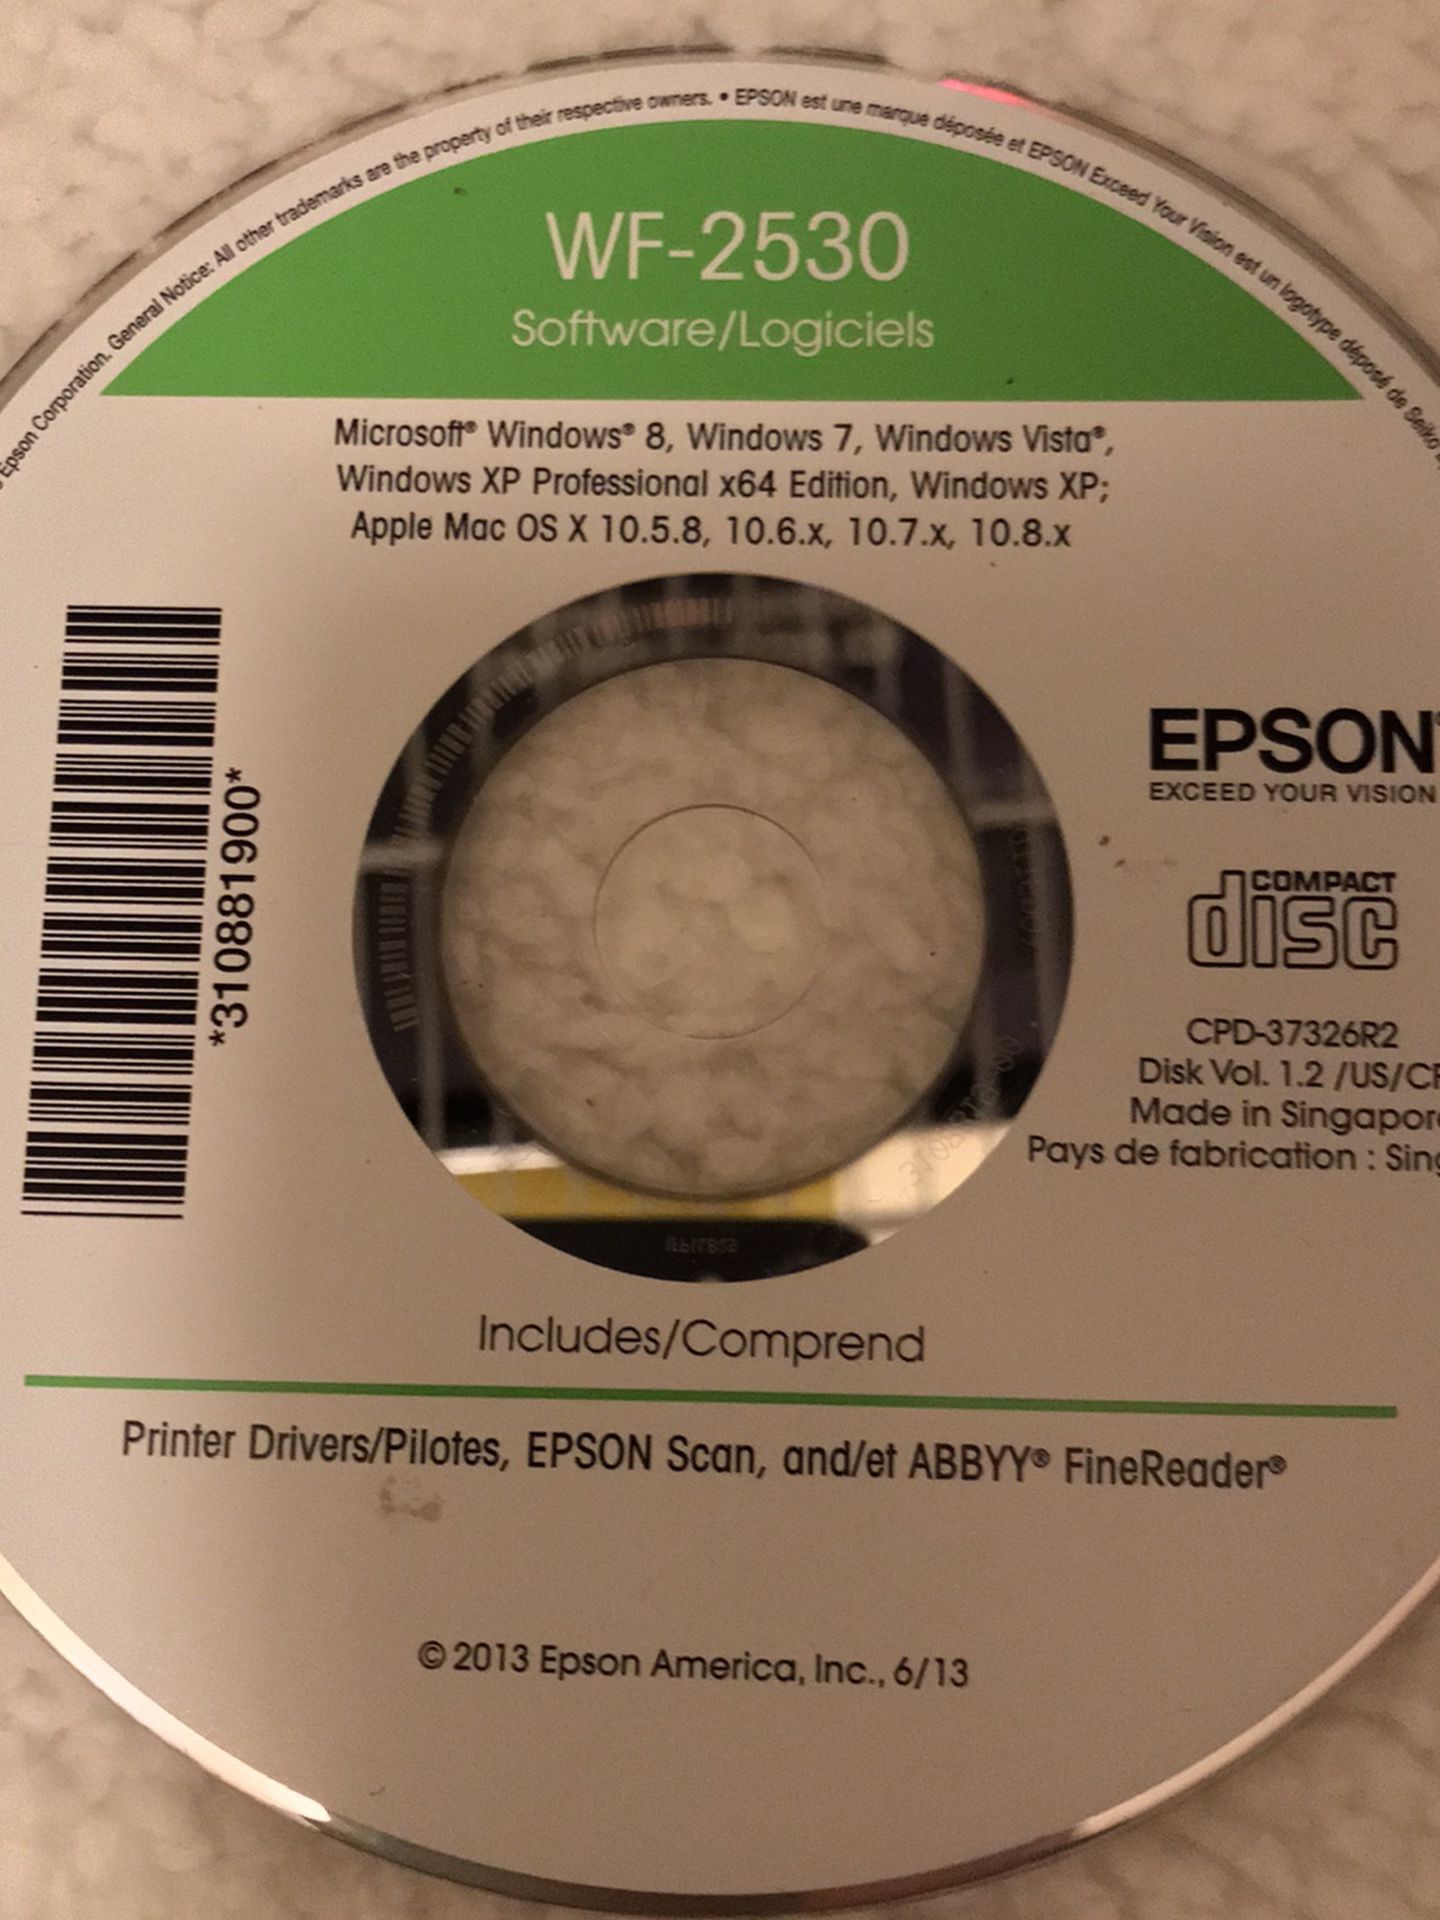 Epson WF-2530 Printer Driver Disc